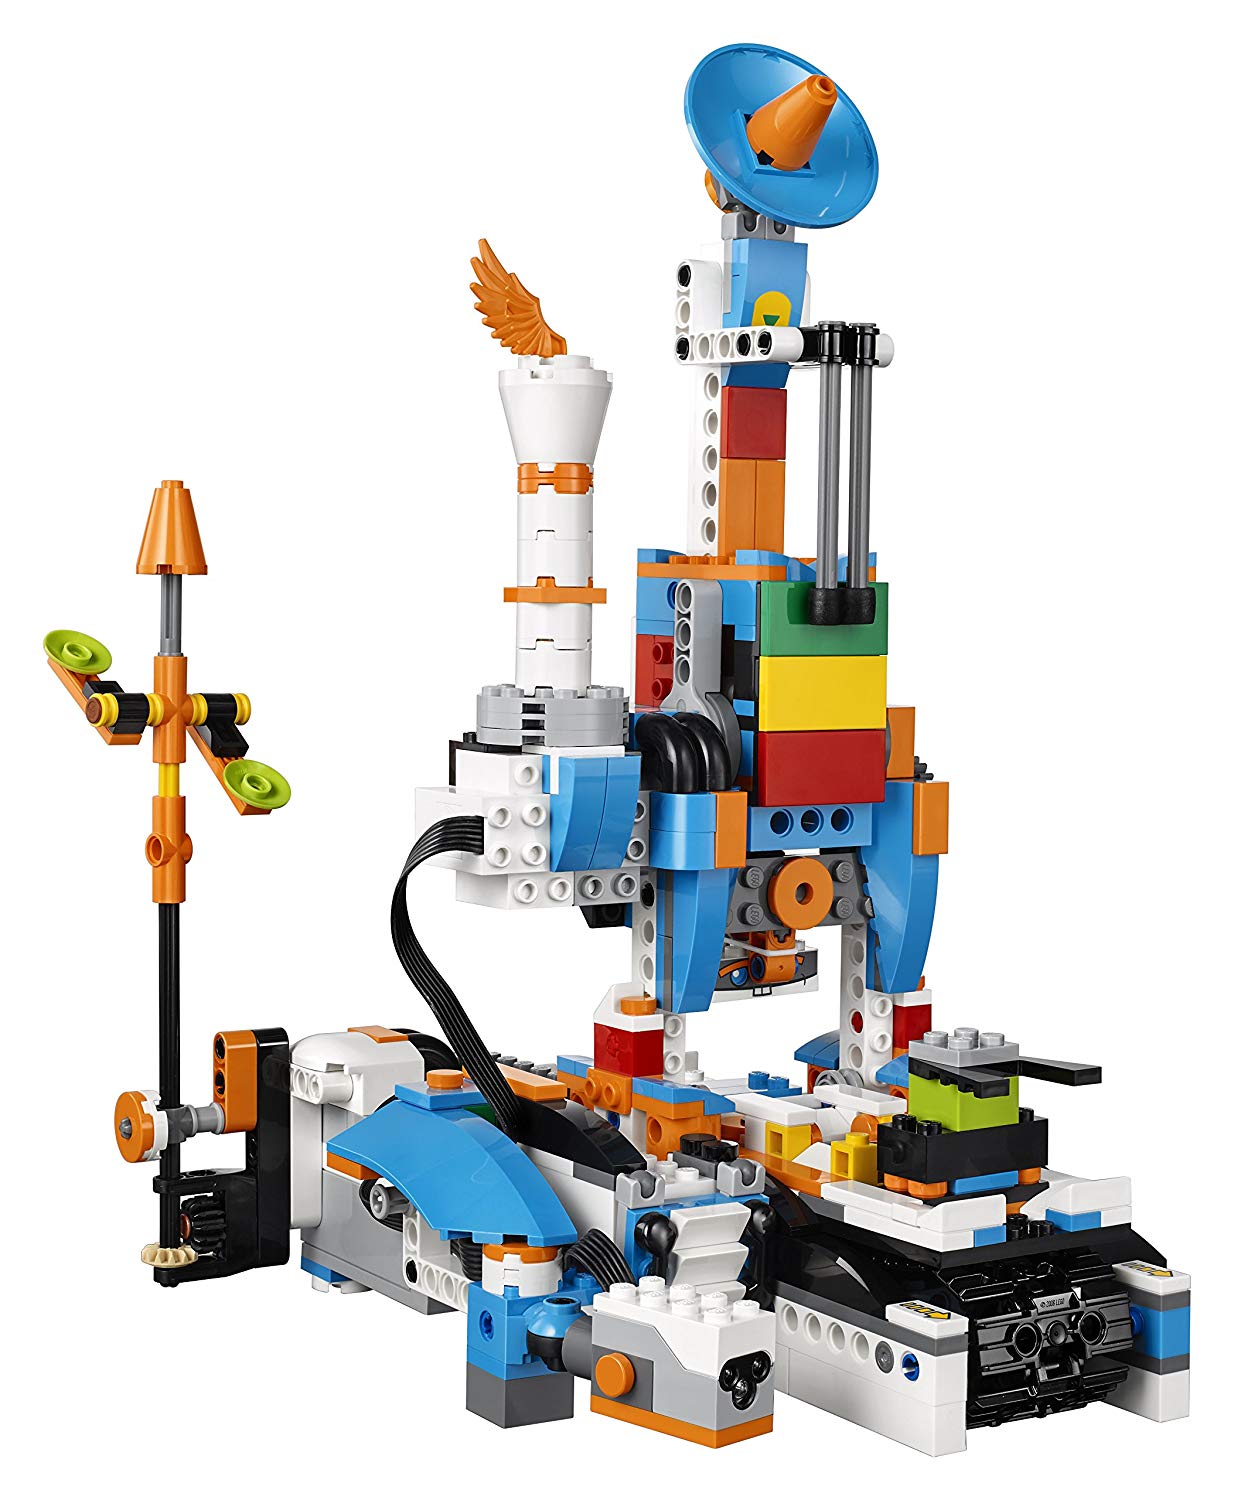 lego robotics kits for kids